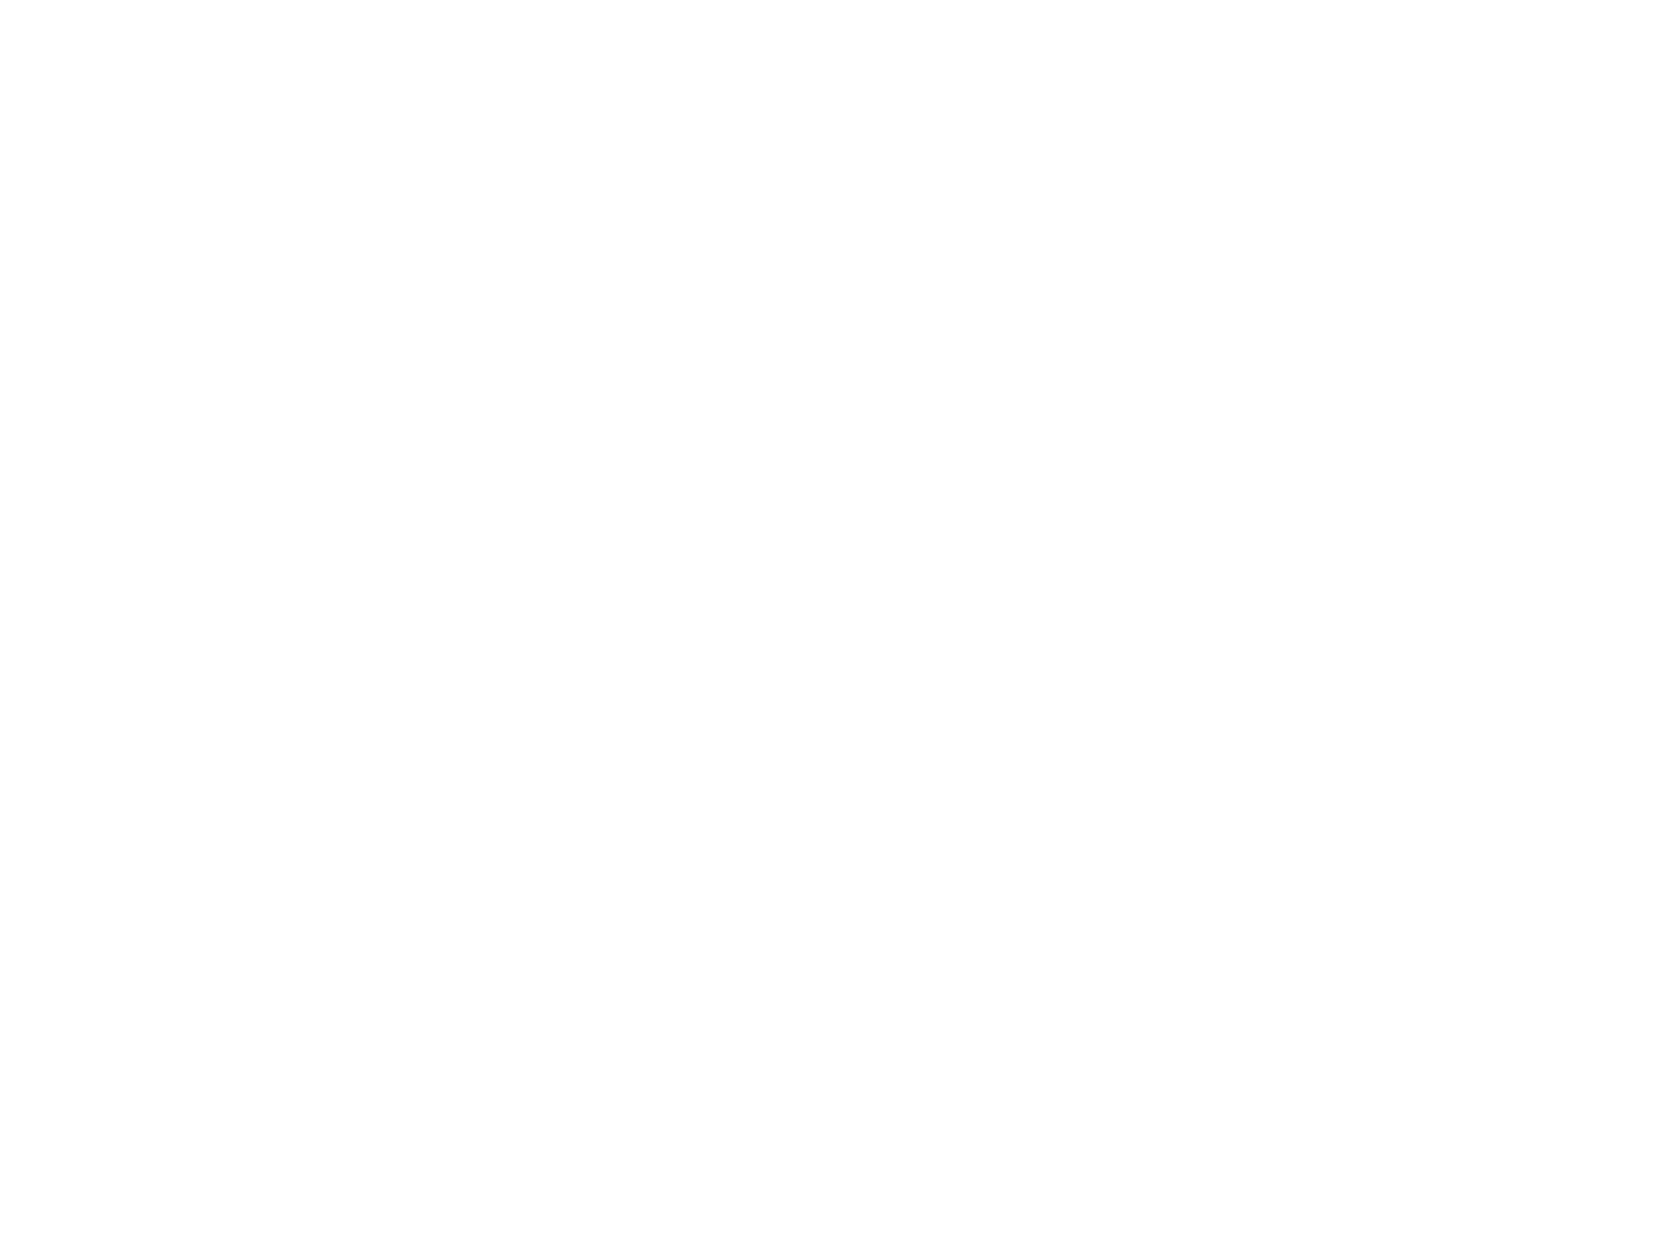 utensils-solid-icon